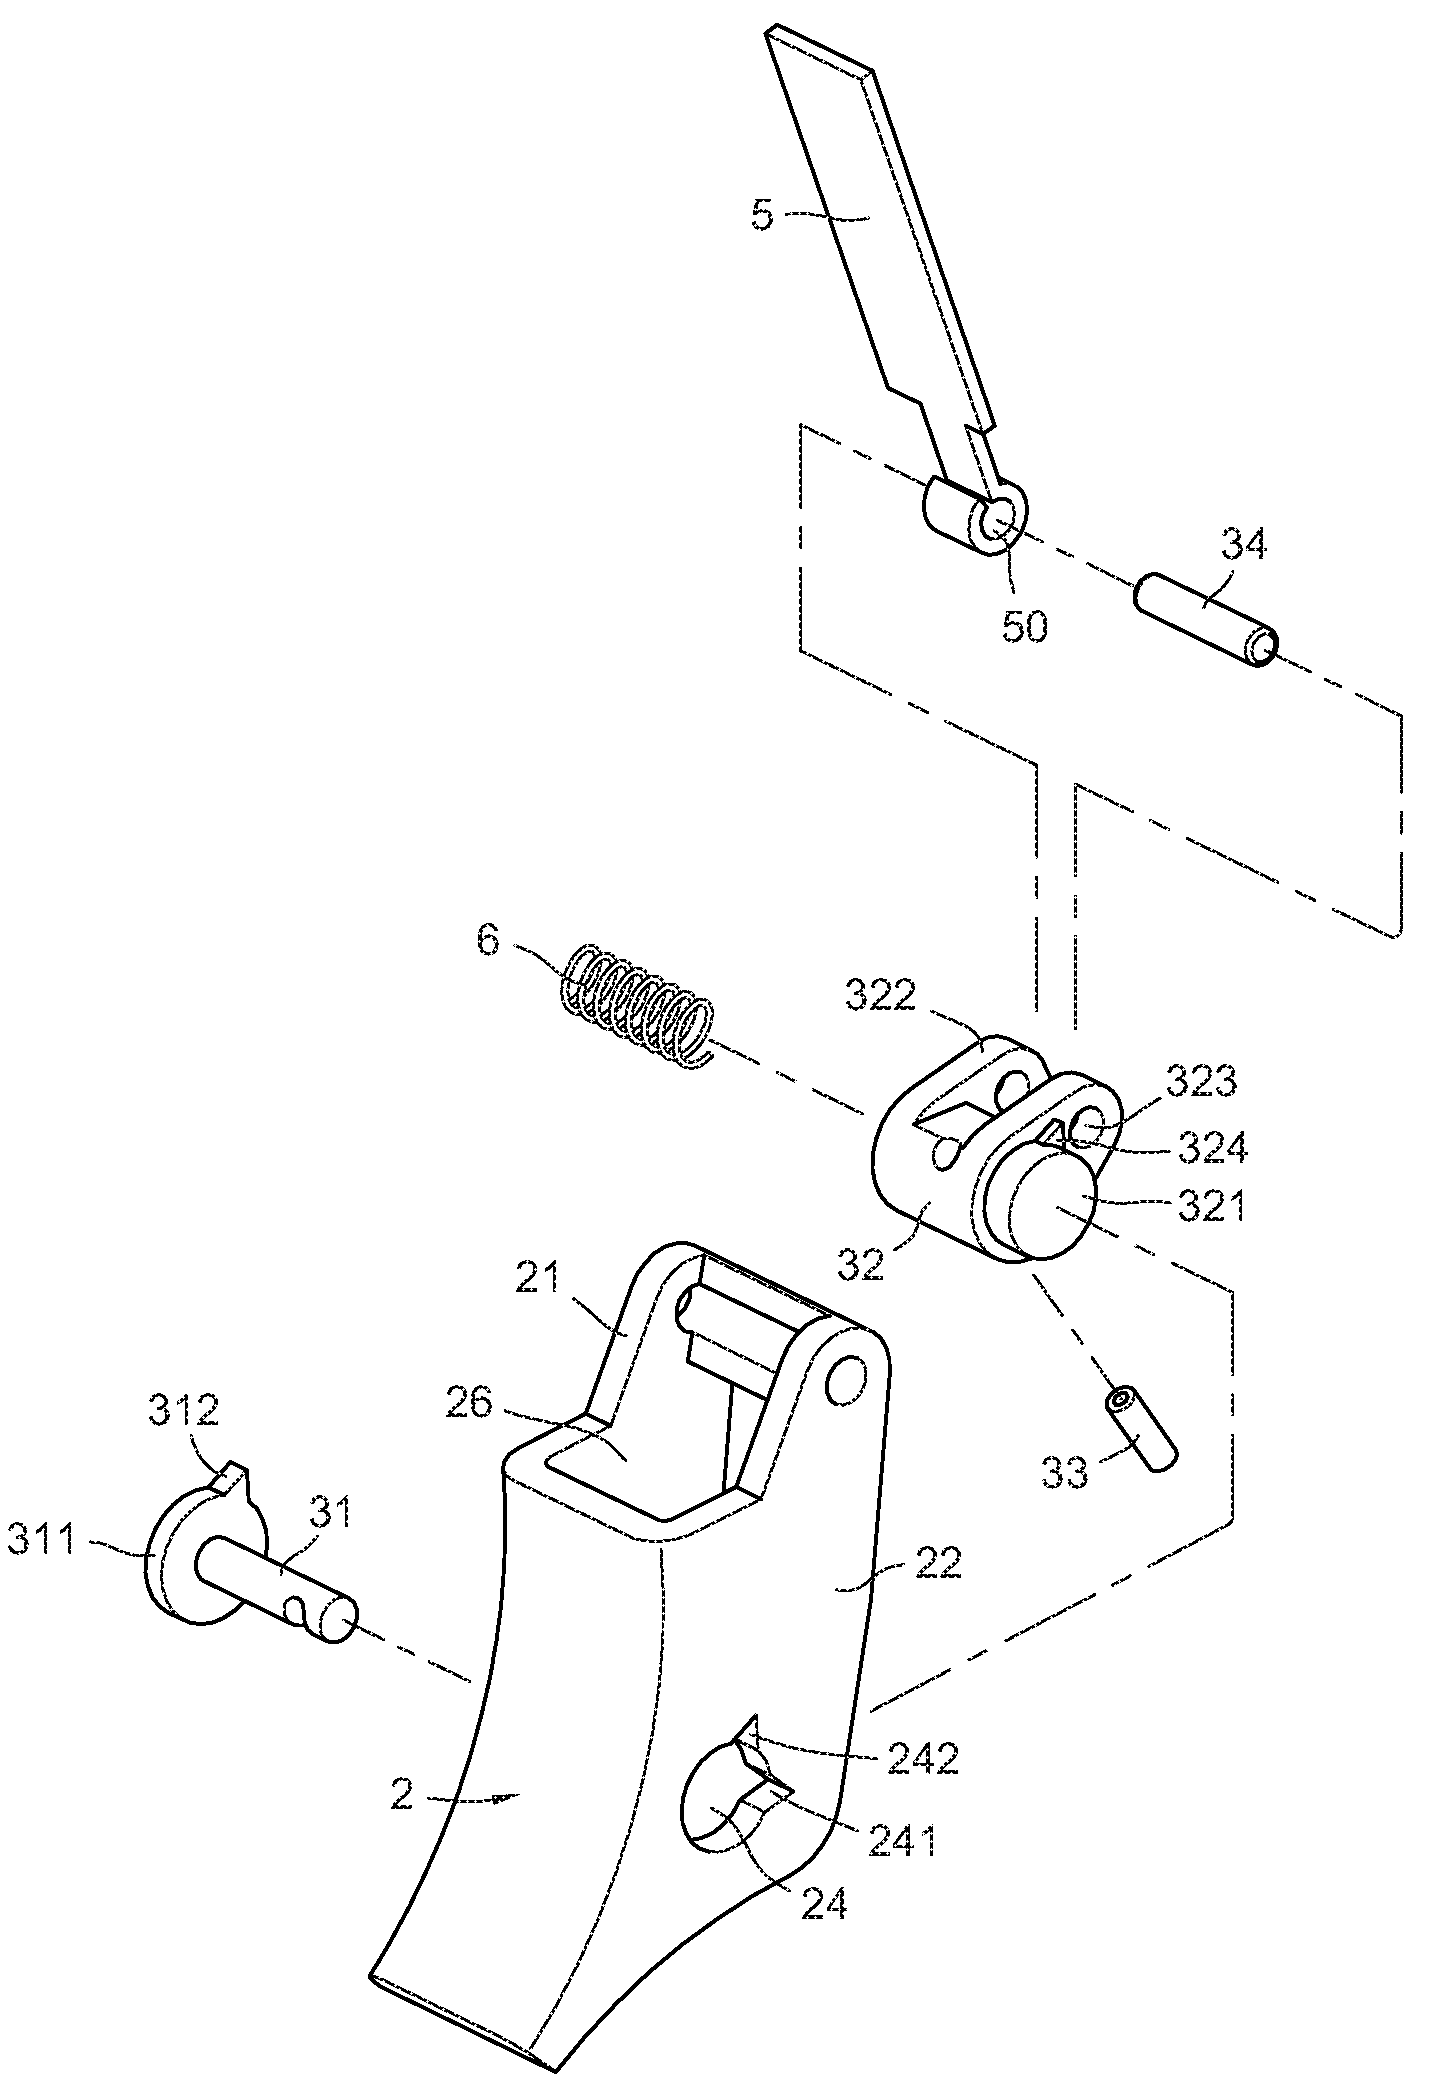 Trigger switch mechanism of nail gun